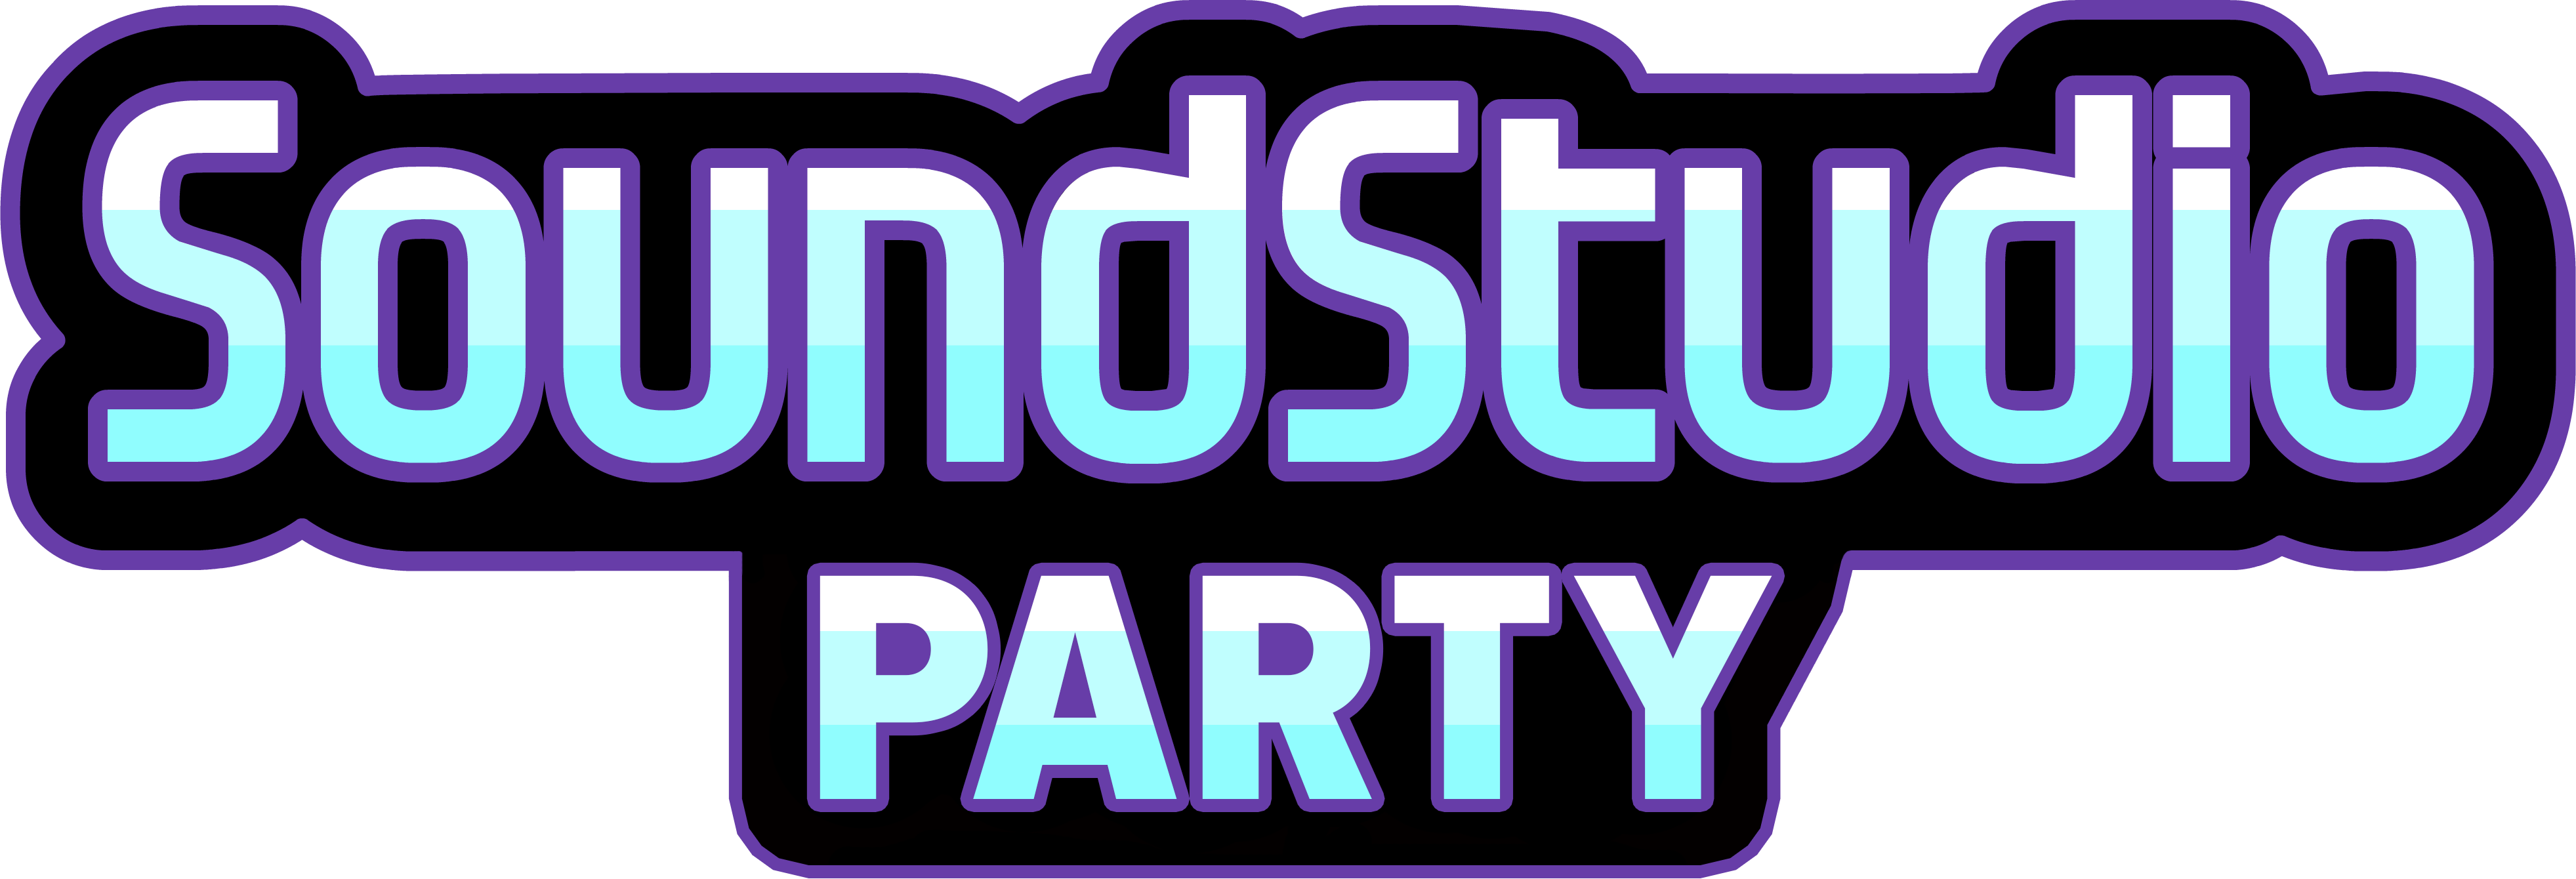 SoundStudio Party logo